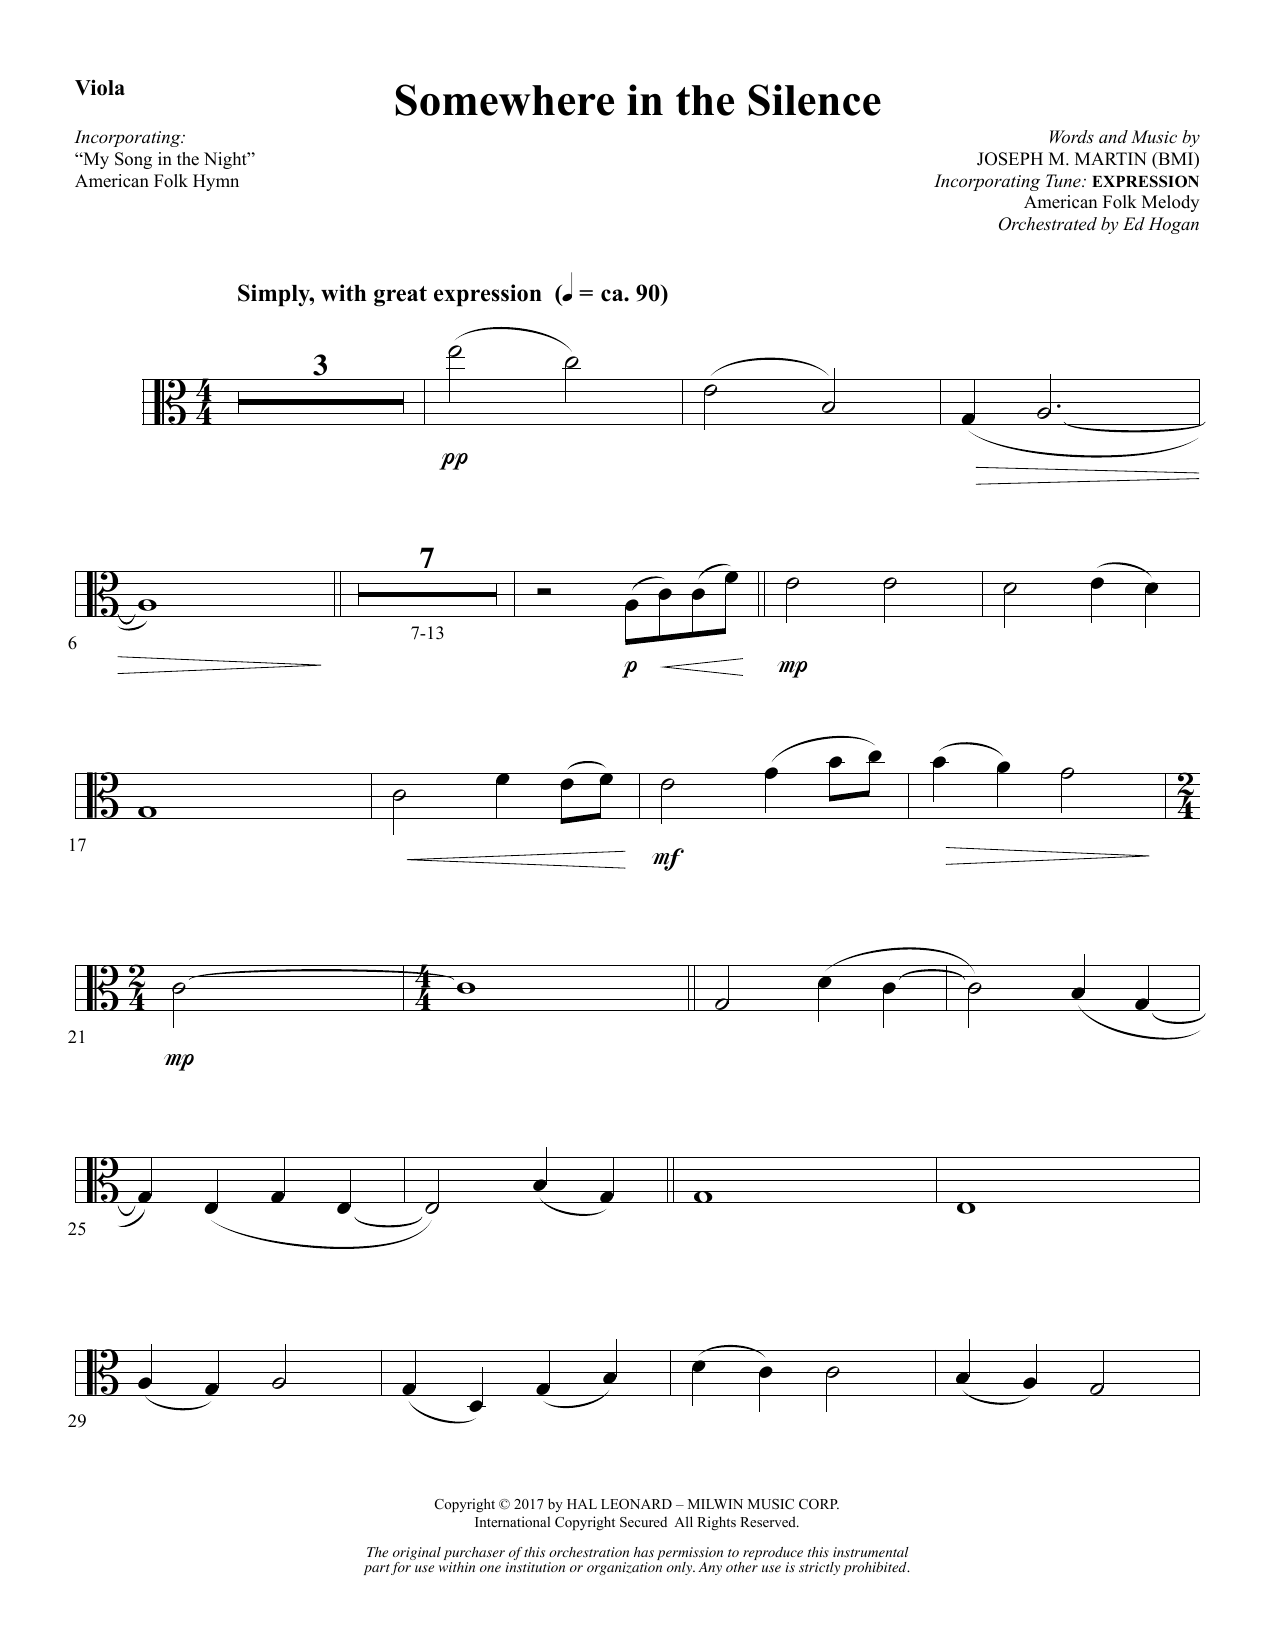 Download Joseph M. Martin Somewhere in the Silence - Viola Sheet Music